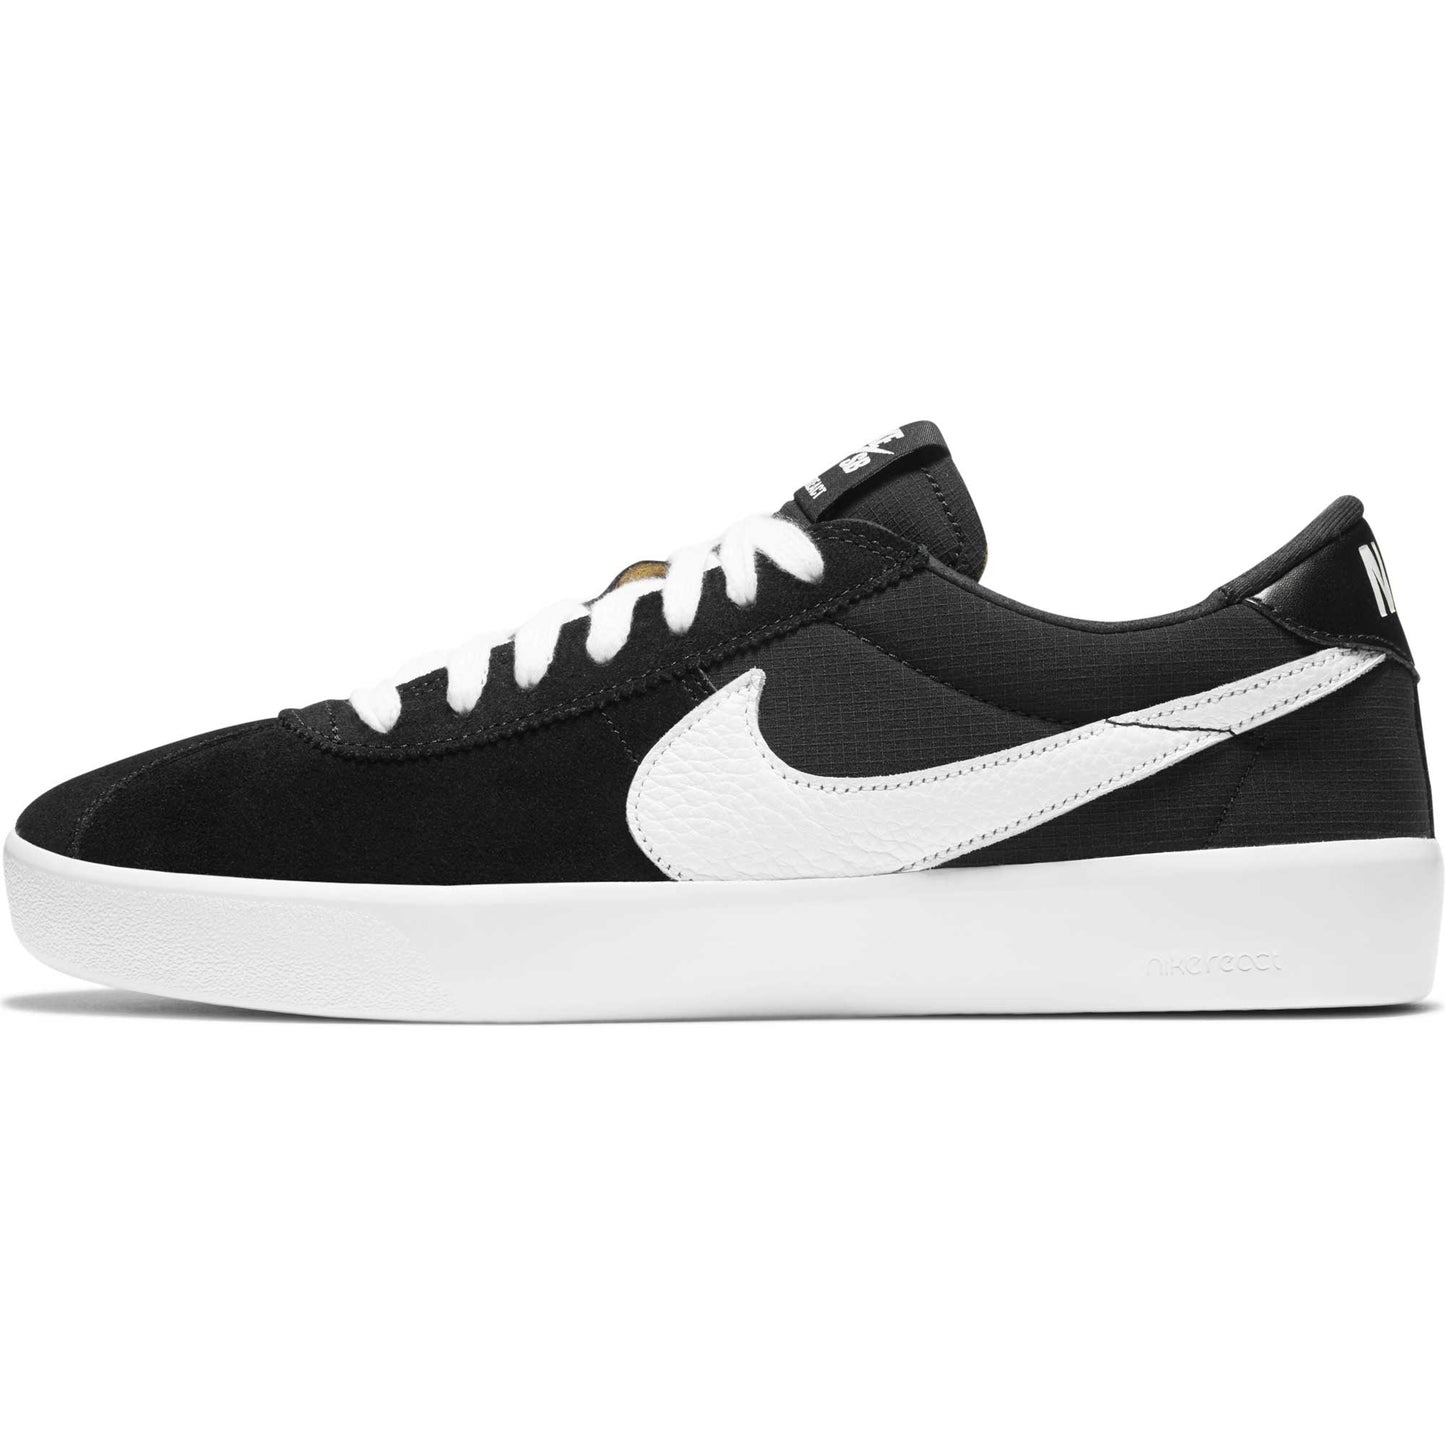 Nike SB Bruin React, black/white-black-anthracite - Tiki Room Skateboards - 5